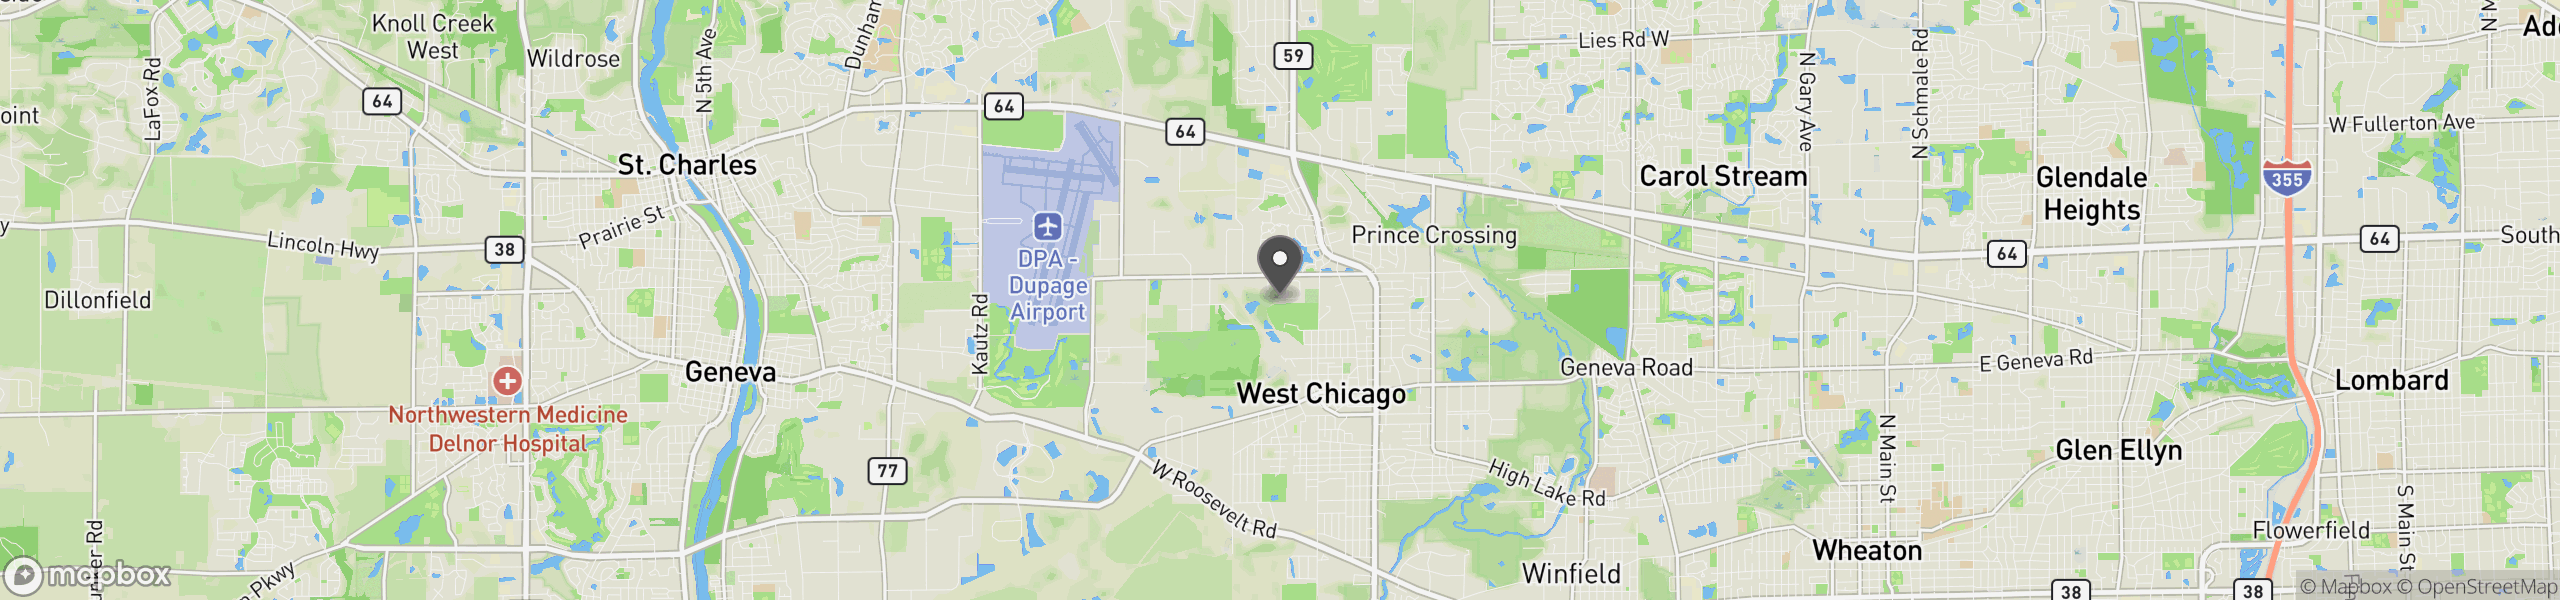 West Chicago, IL 60185